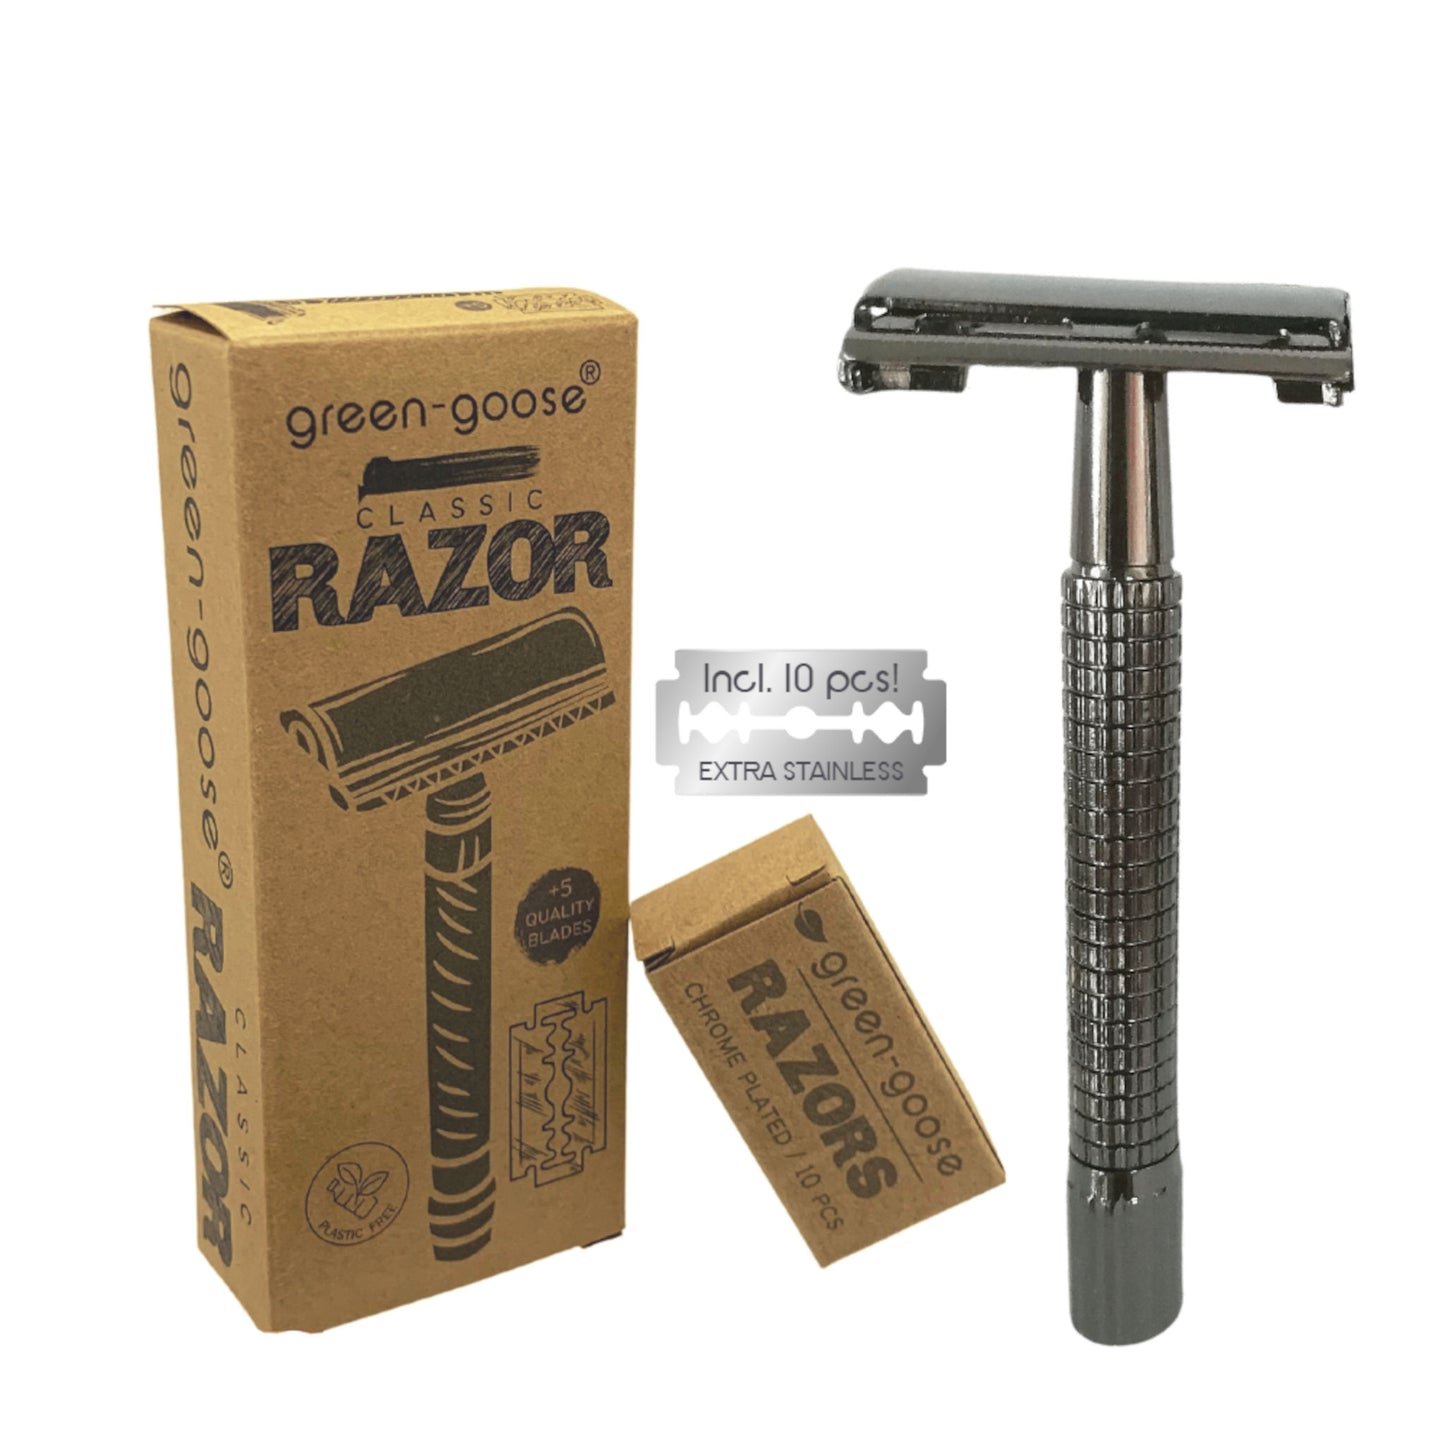 Safety razor incl. razor blades